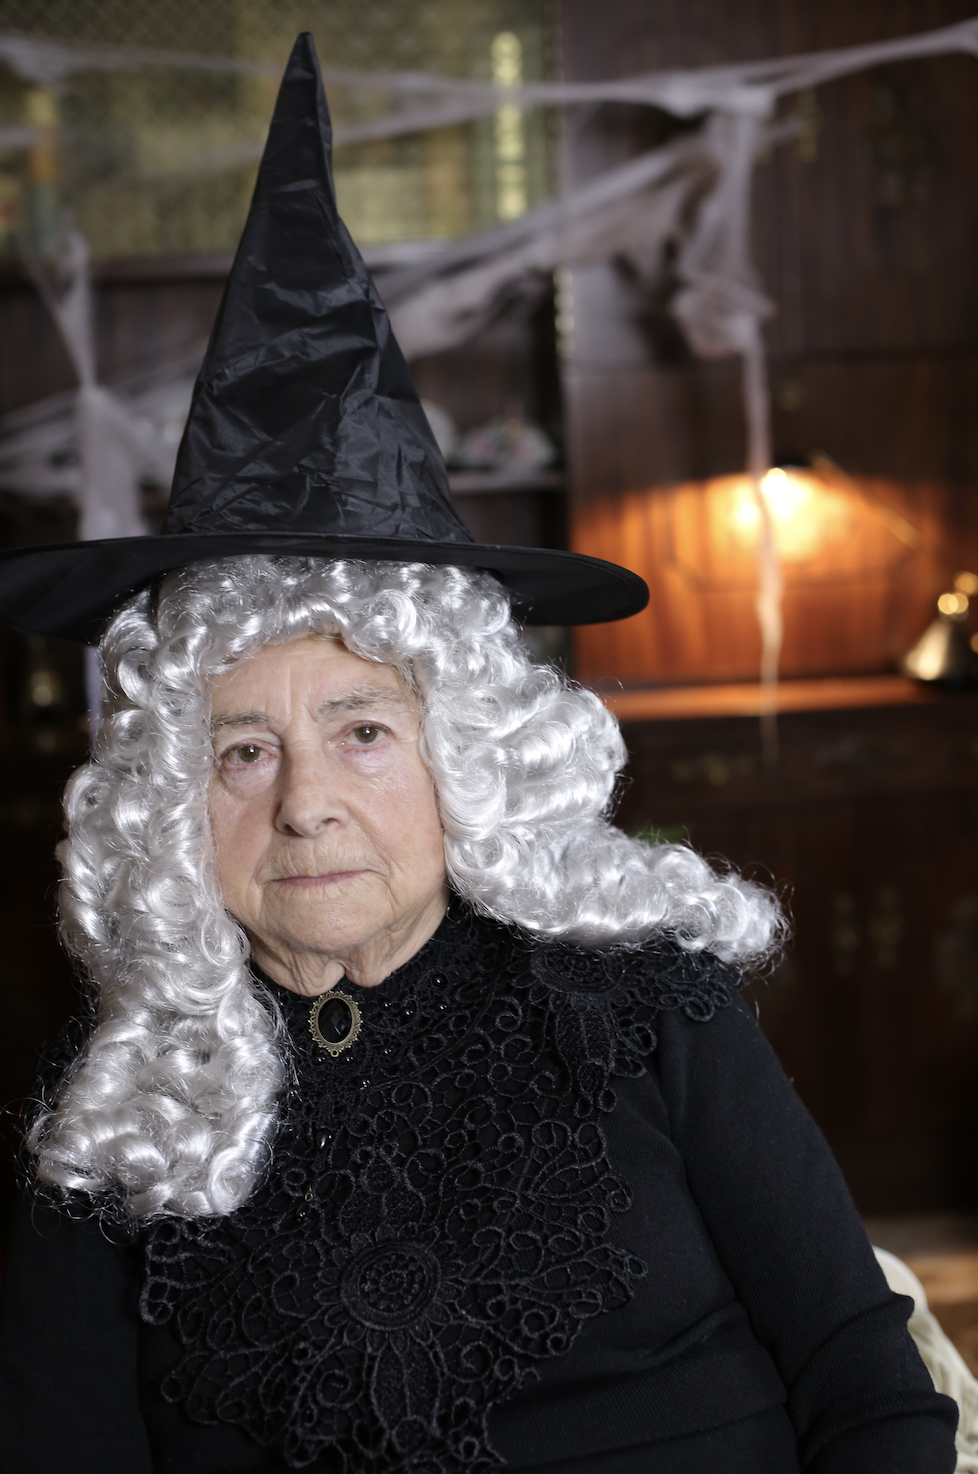 A woman dressed like a witch